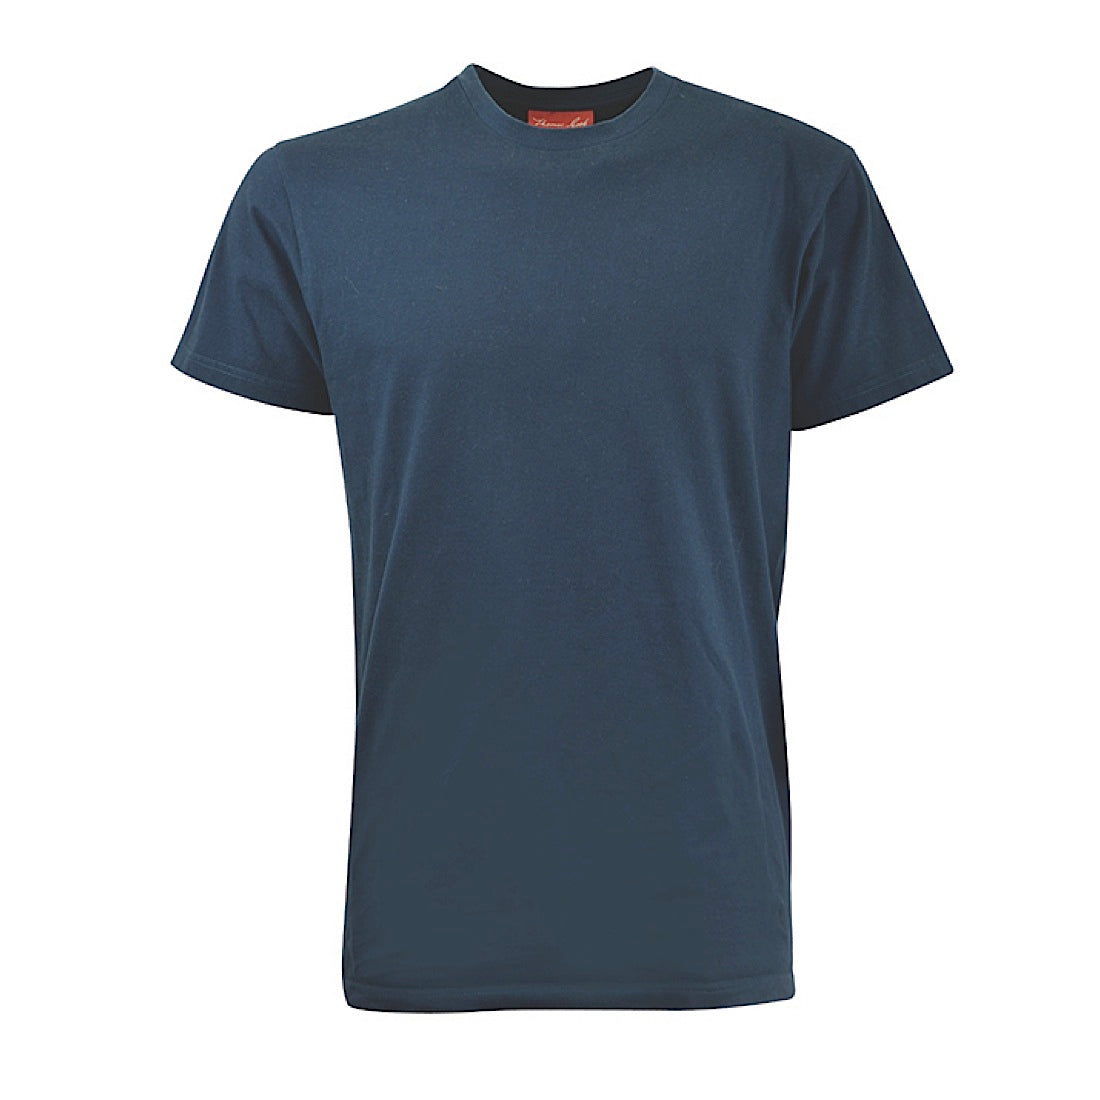 Thomas Cook Mens Classic Fit T-Shirt Navy